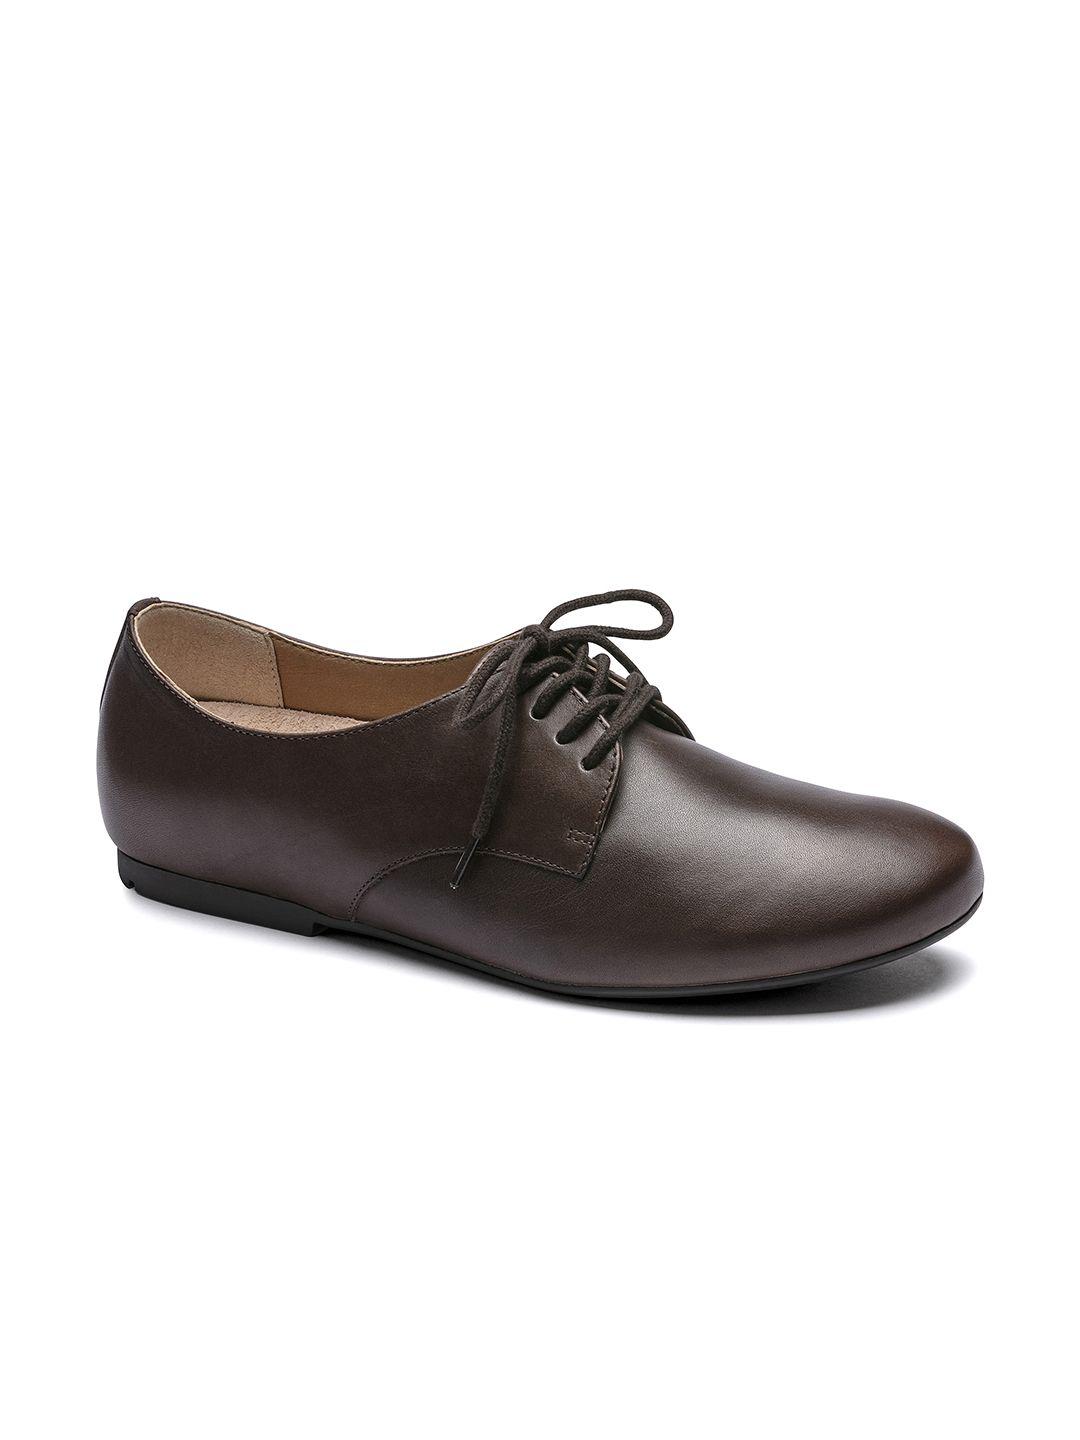 birkenstock women saunders natural leather narrow width shoes